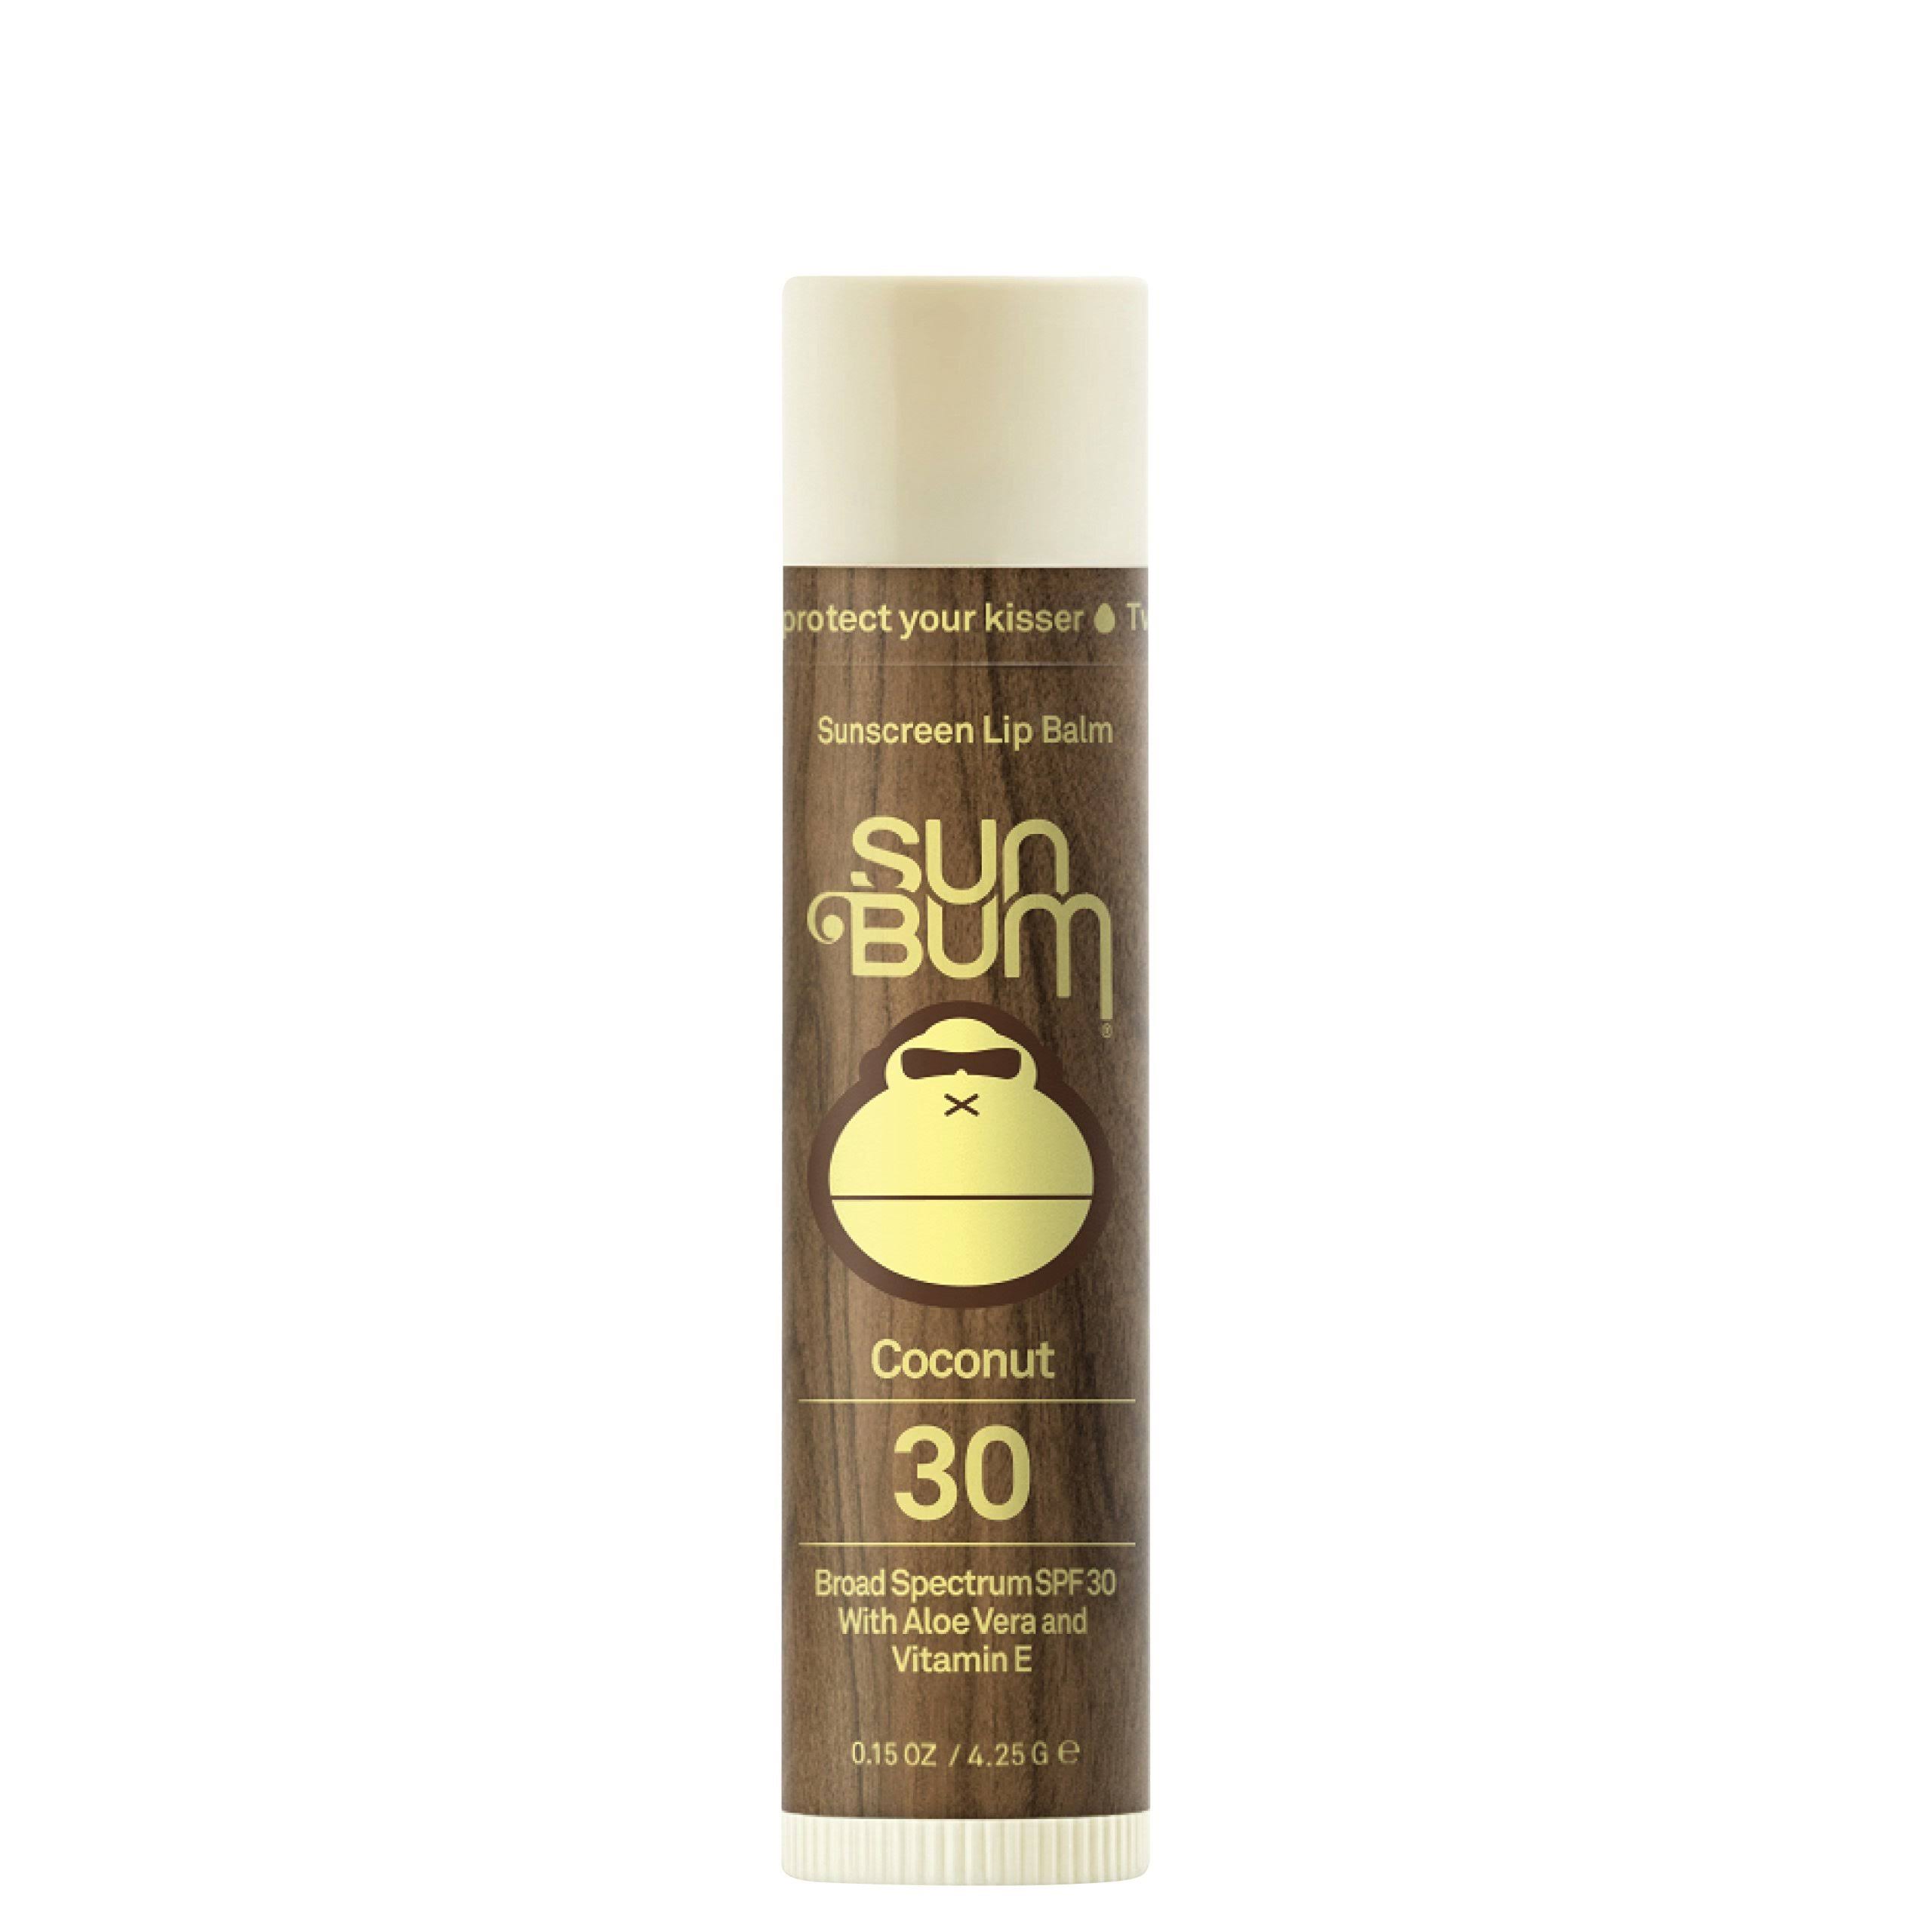 Sun Bum Lip Balm - Coconut, SPF 30, 0.15oz